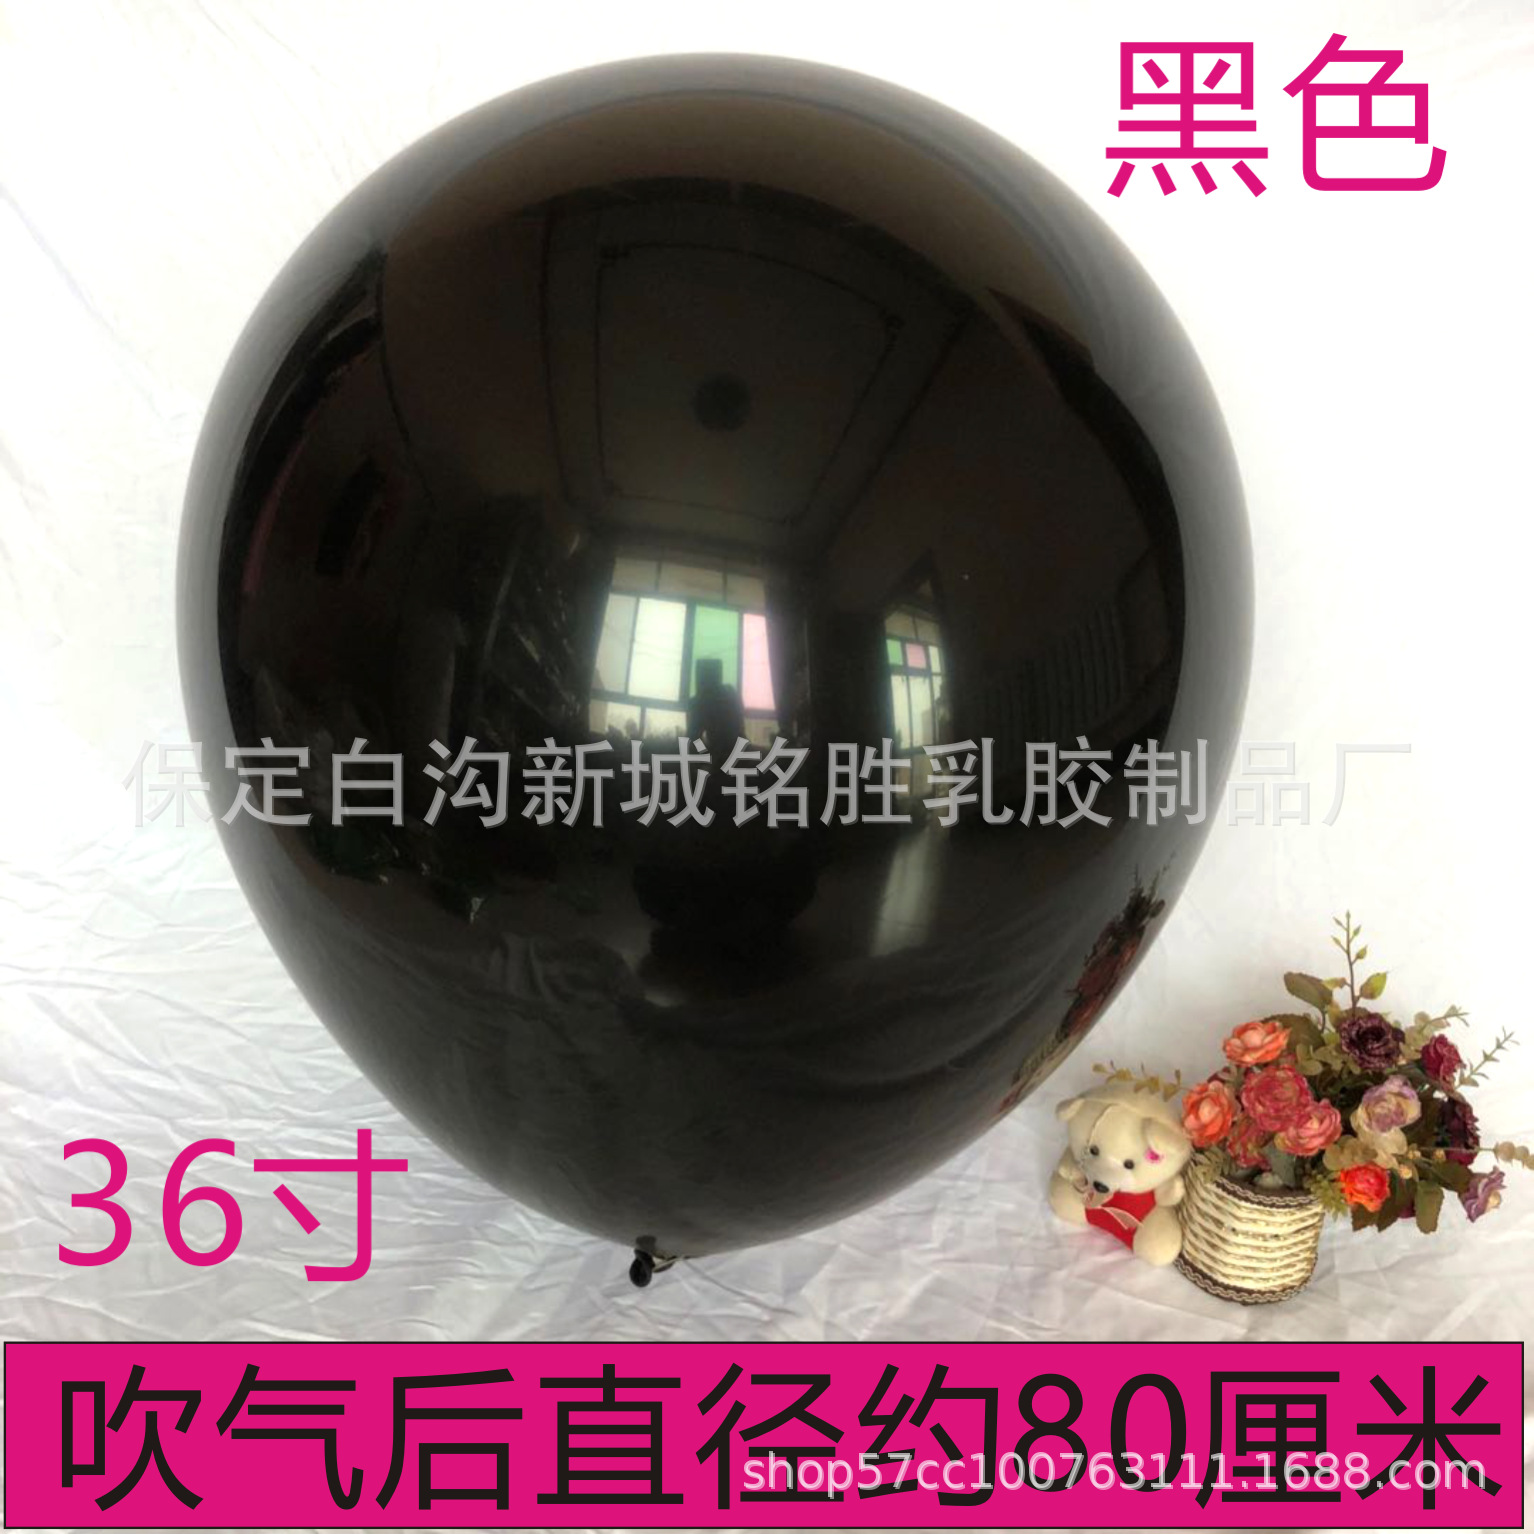 36-Inch Balloon Bar Atmosphere Hydrogen Balloon KTV Decorative Balloon Rubber Balloons Printing Advertising Logo Printing